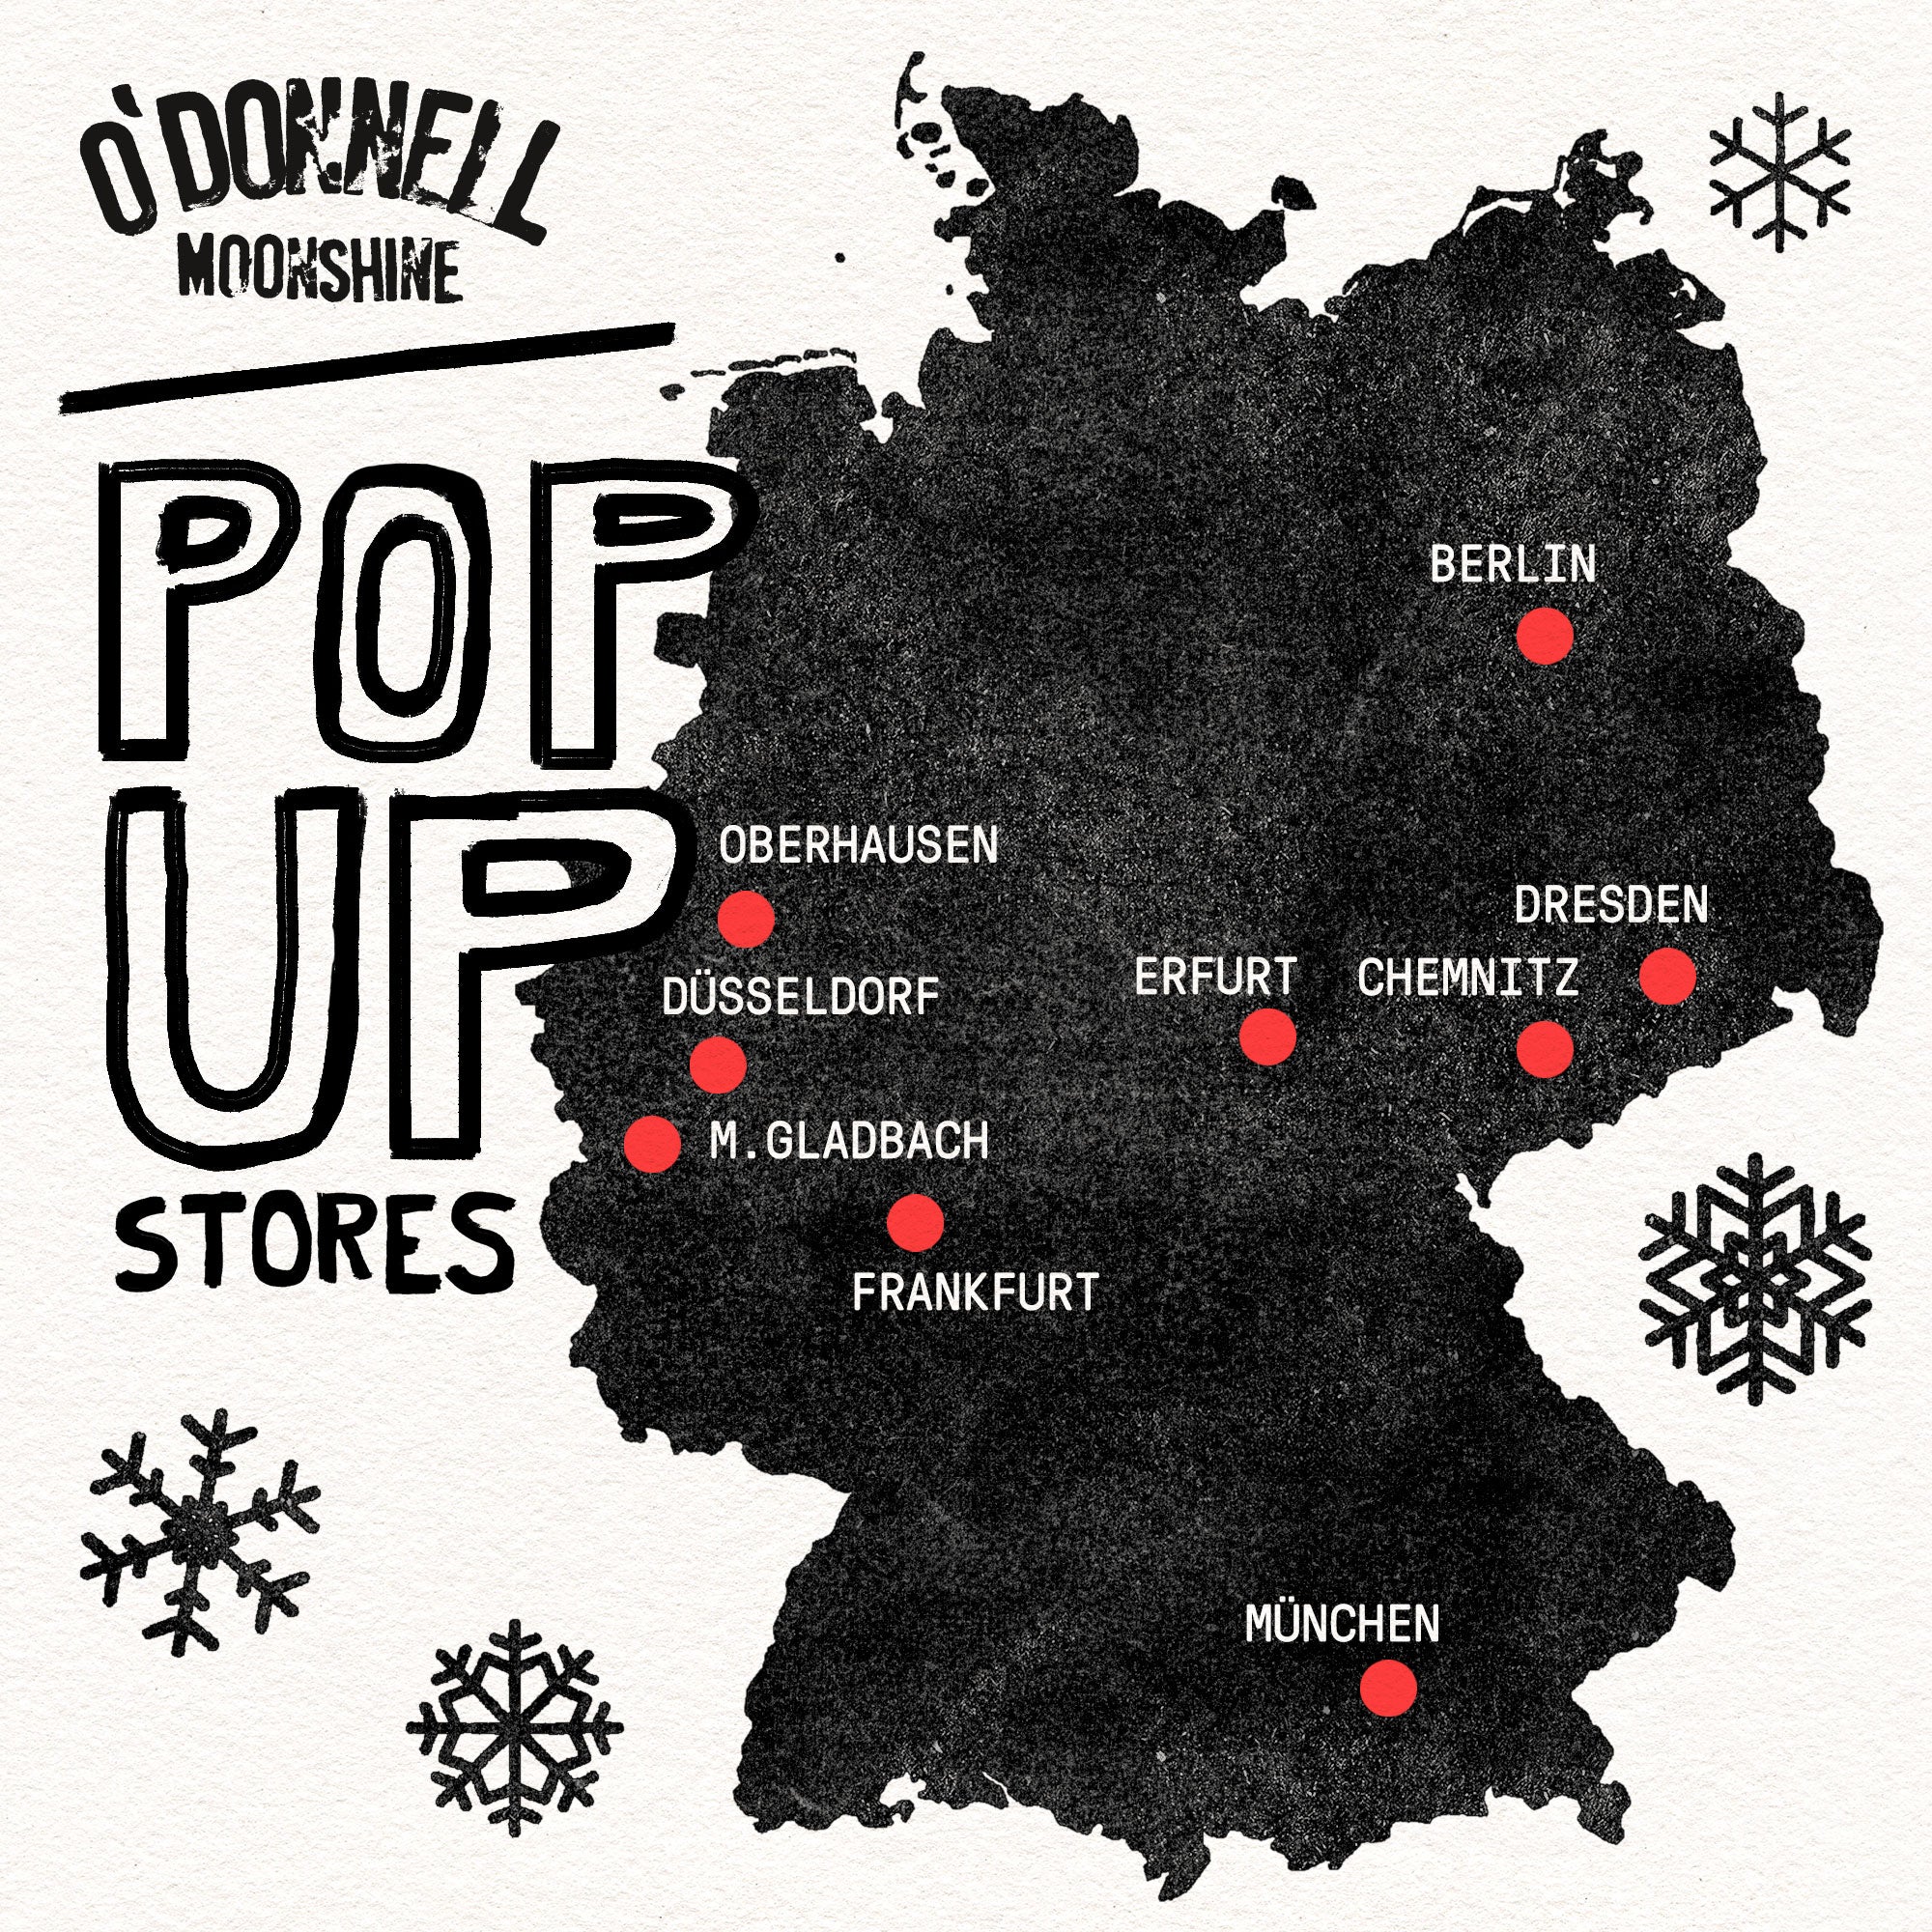 O'Donnell Moonshine Shops in Deutschland